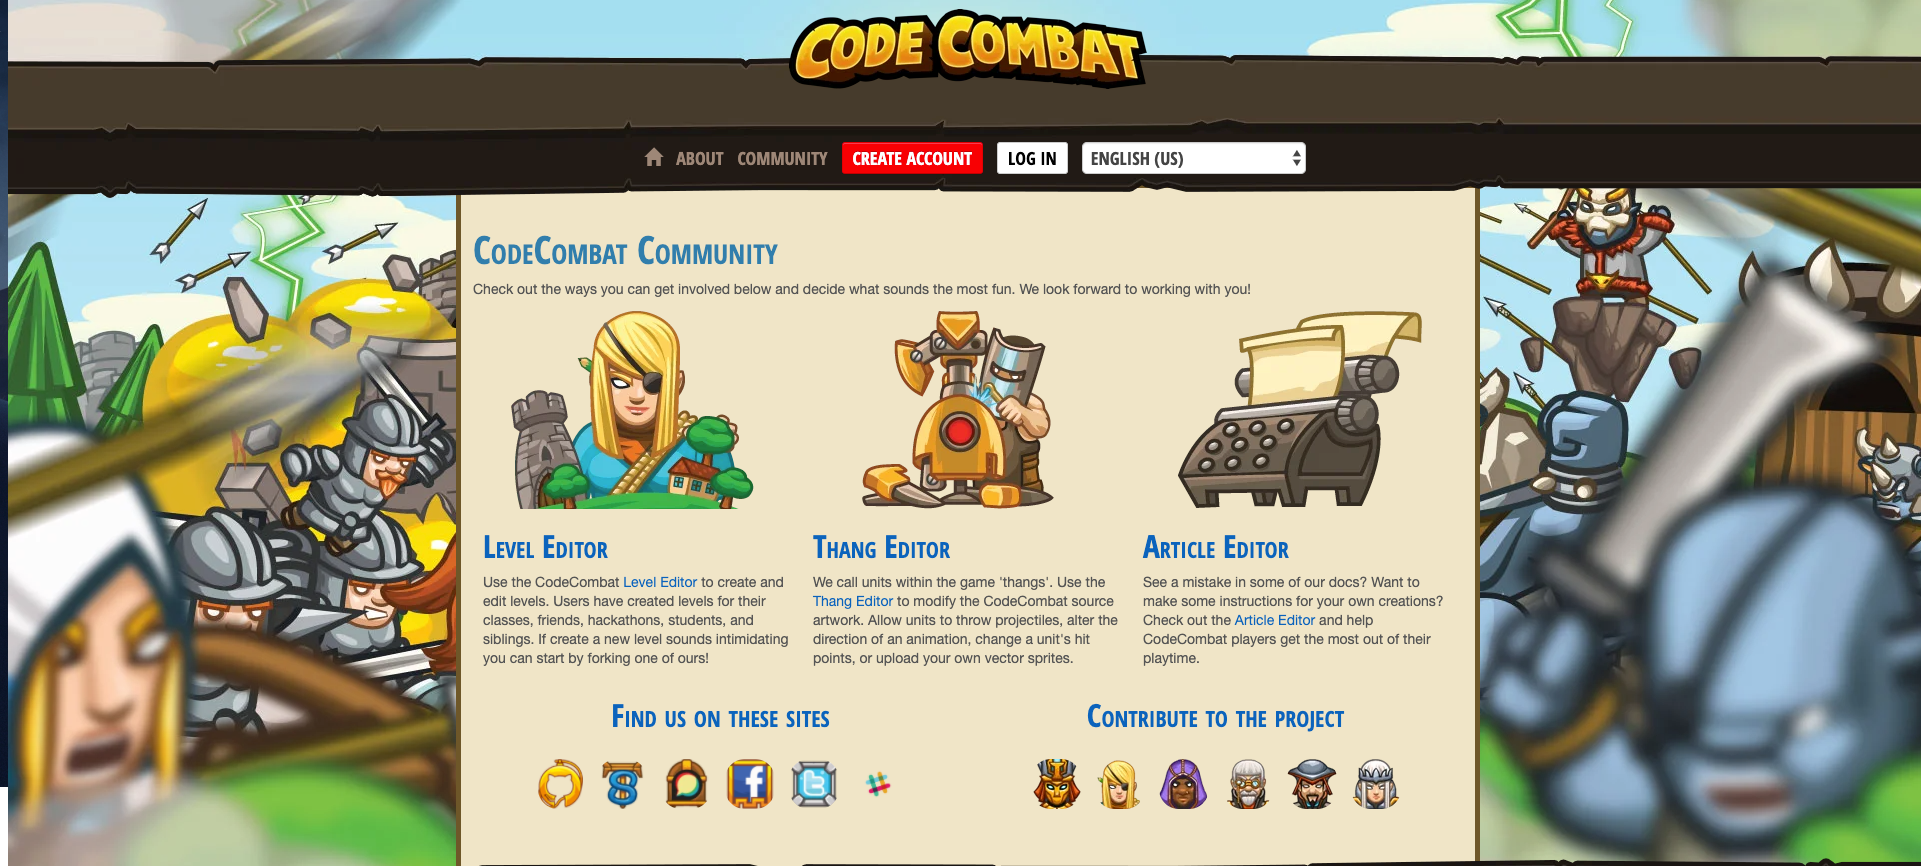 CodeCombat Community Support